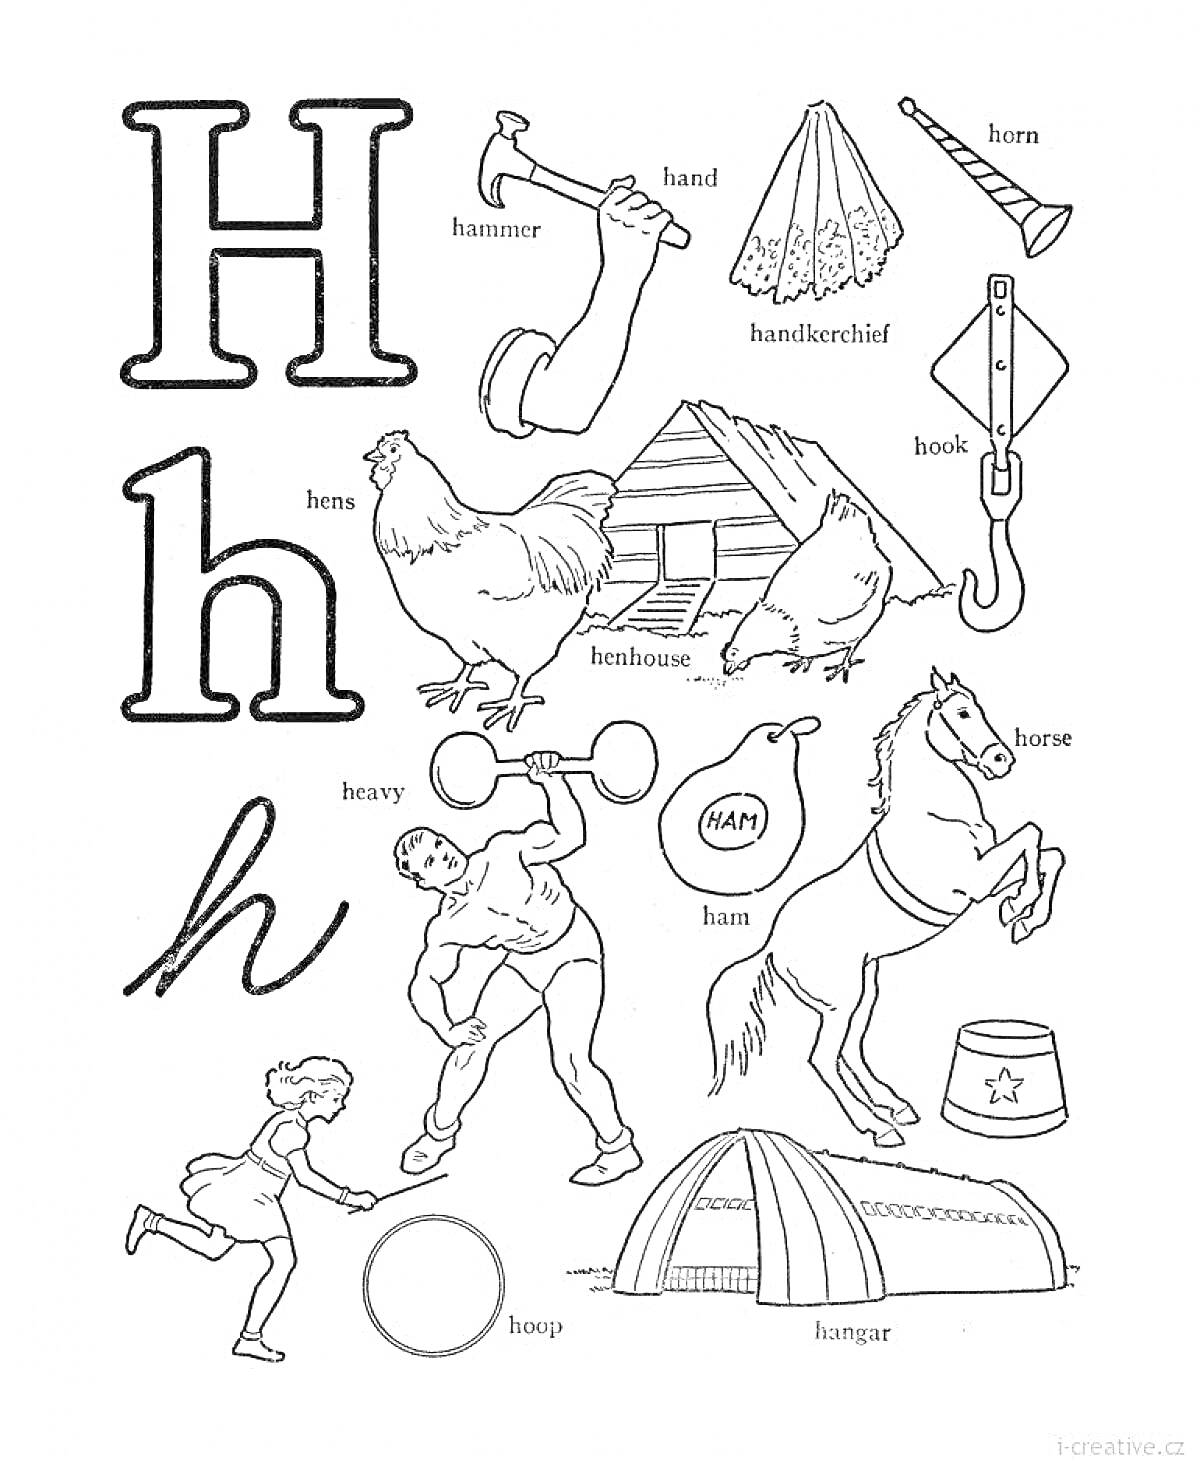 Раскраска Алфавит. Буква H с иллюстрациями: молоток, рука, платок, рог, курица, курятник, крюк, книга, тяжёлая атлетика, бегун, обруч, цирковой шатёр, бочка, конь на дыбах, ветчина